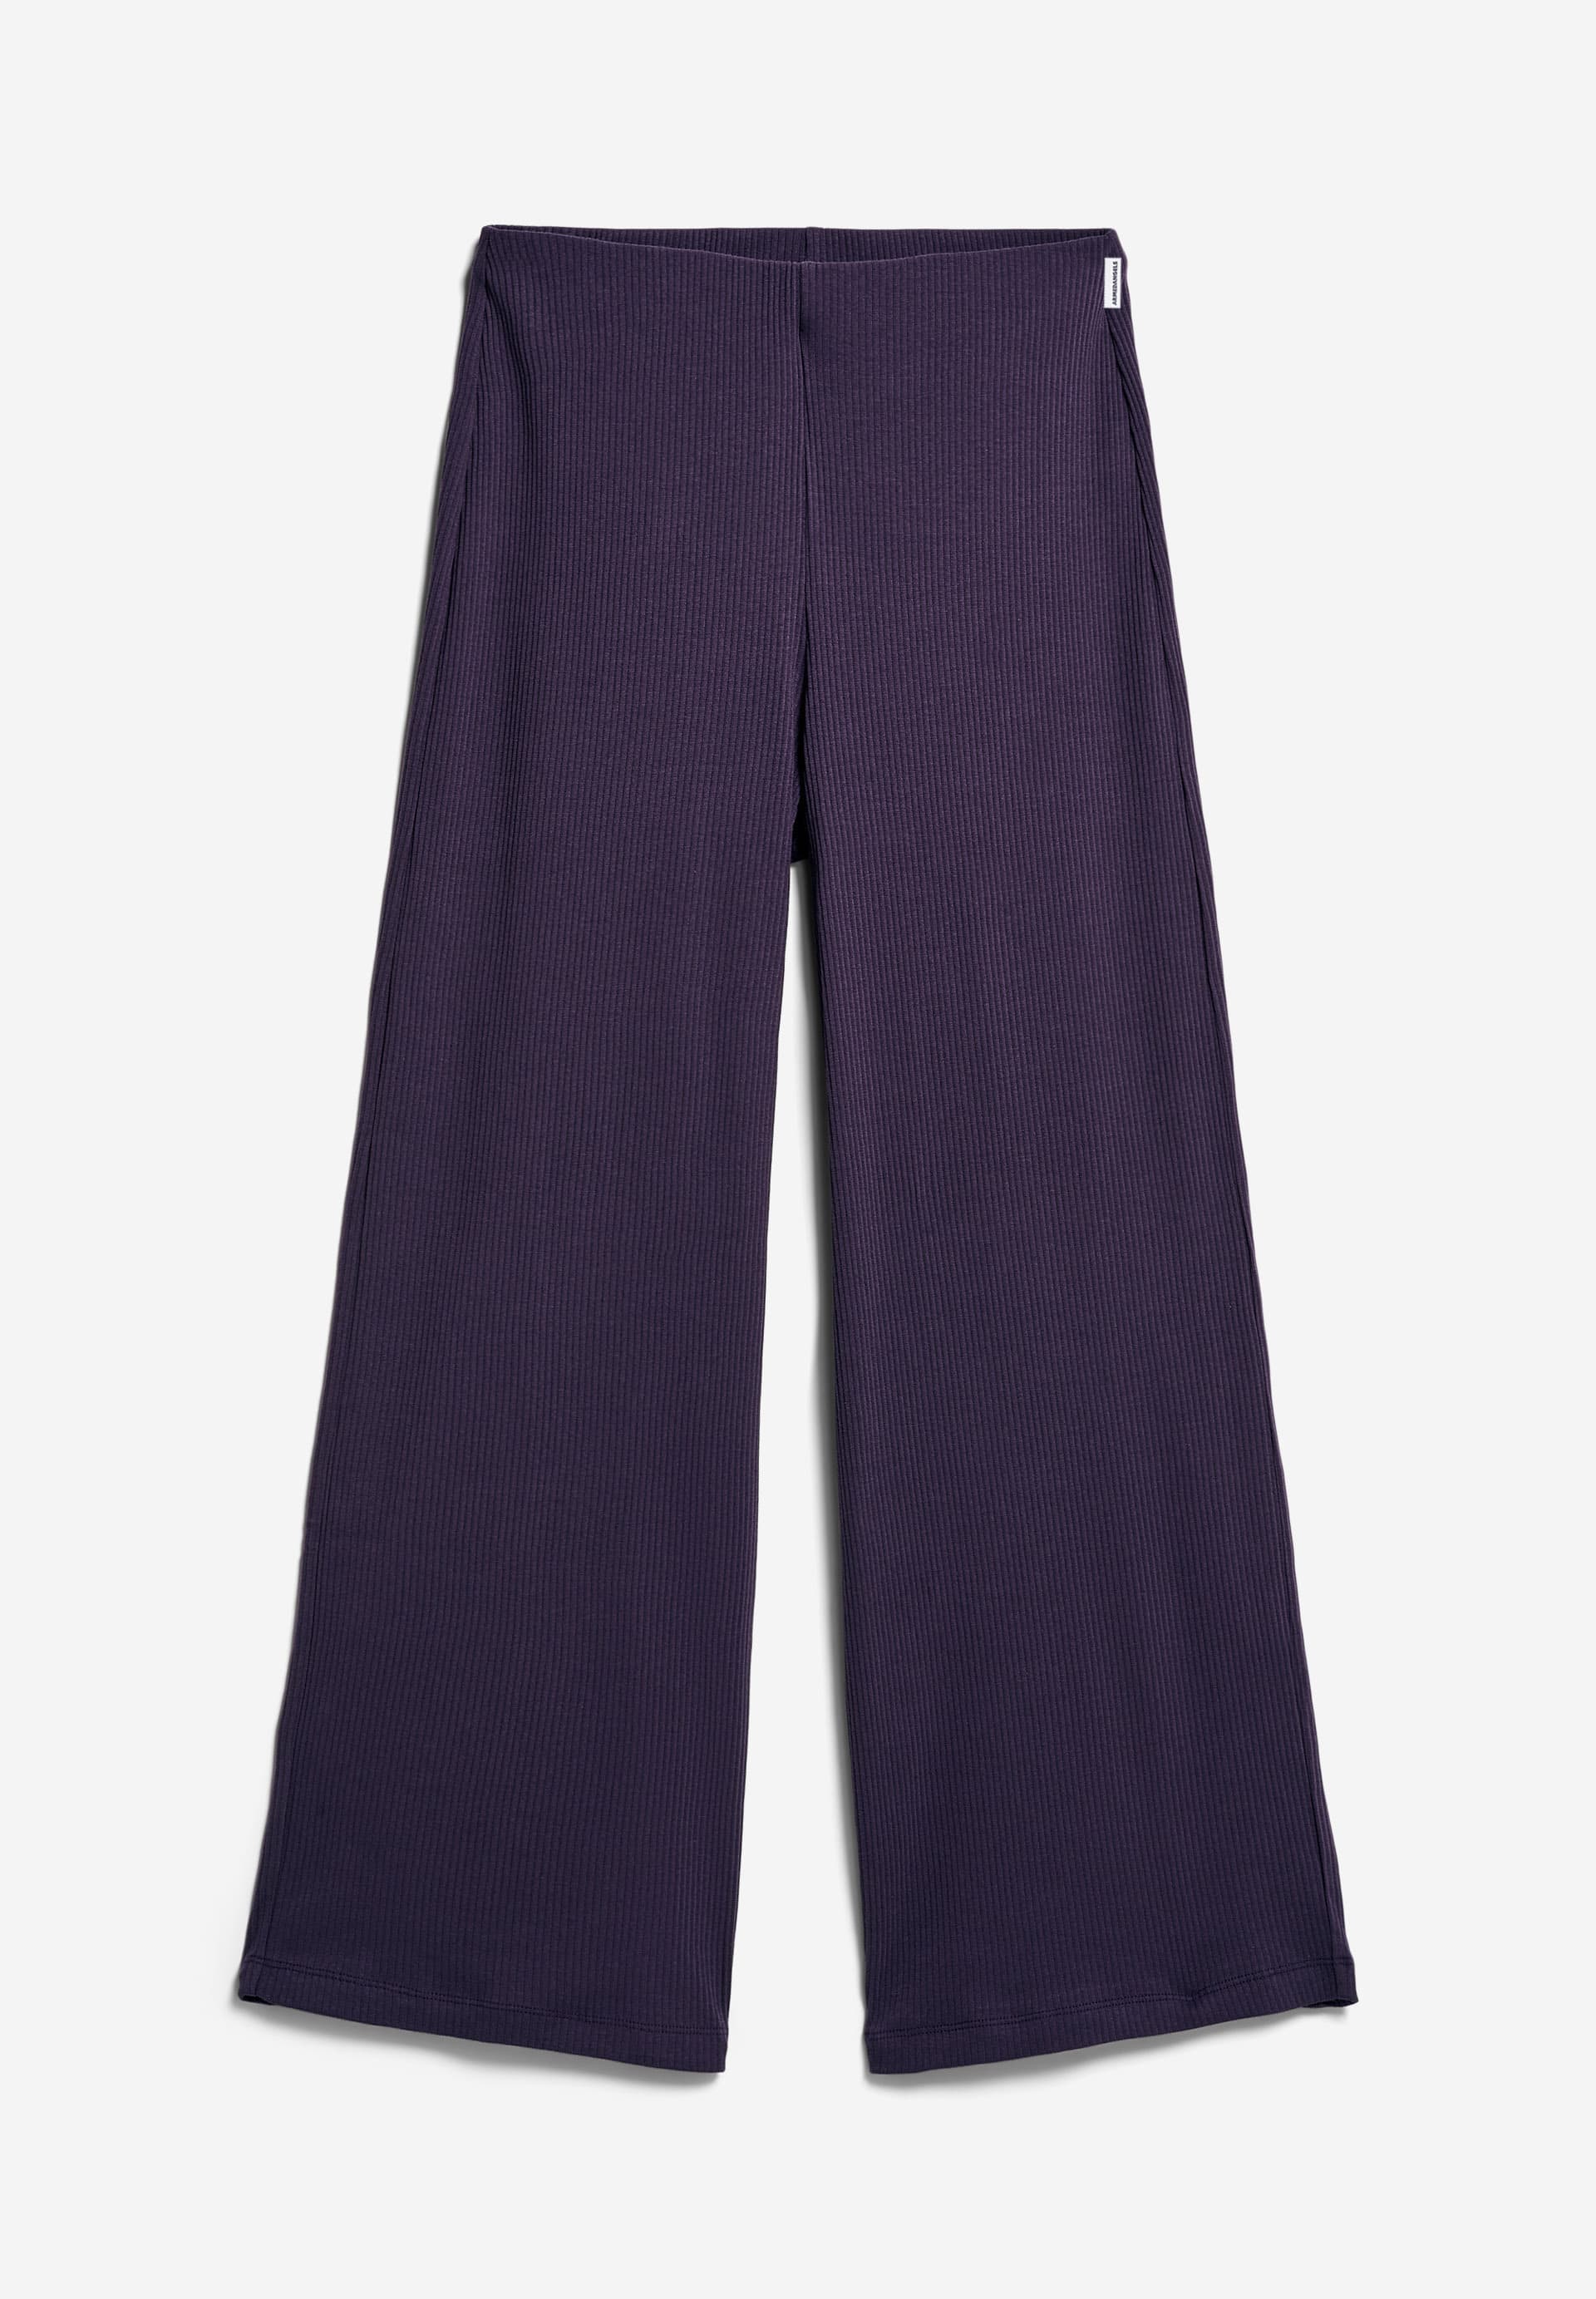 NIAAN Rib-Jersey Pants made of Organic Cotton Mix